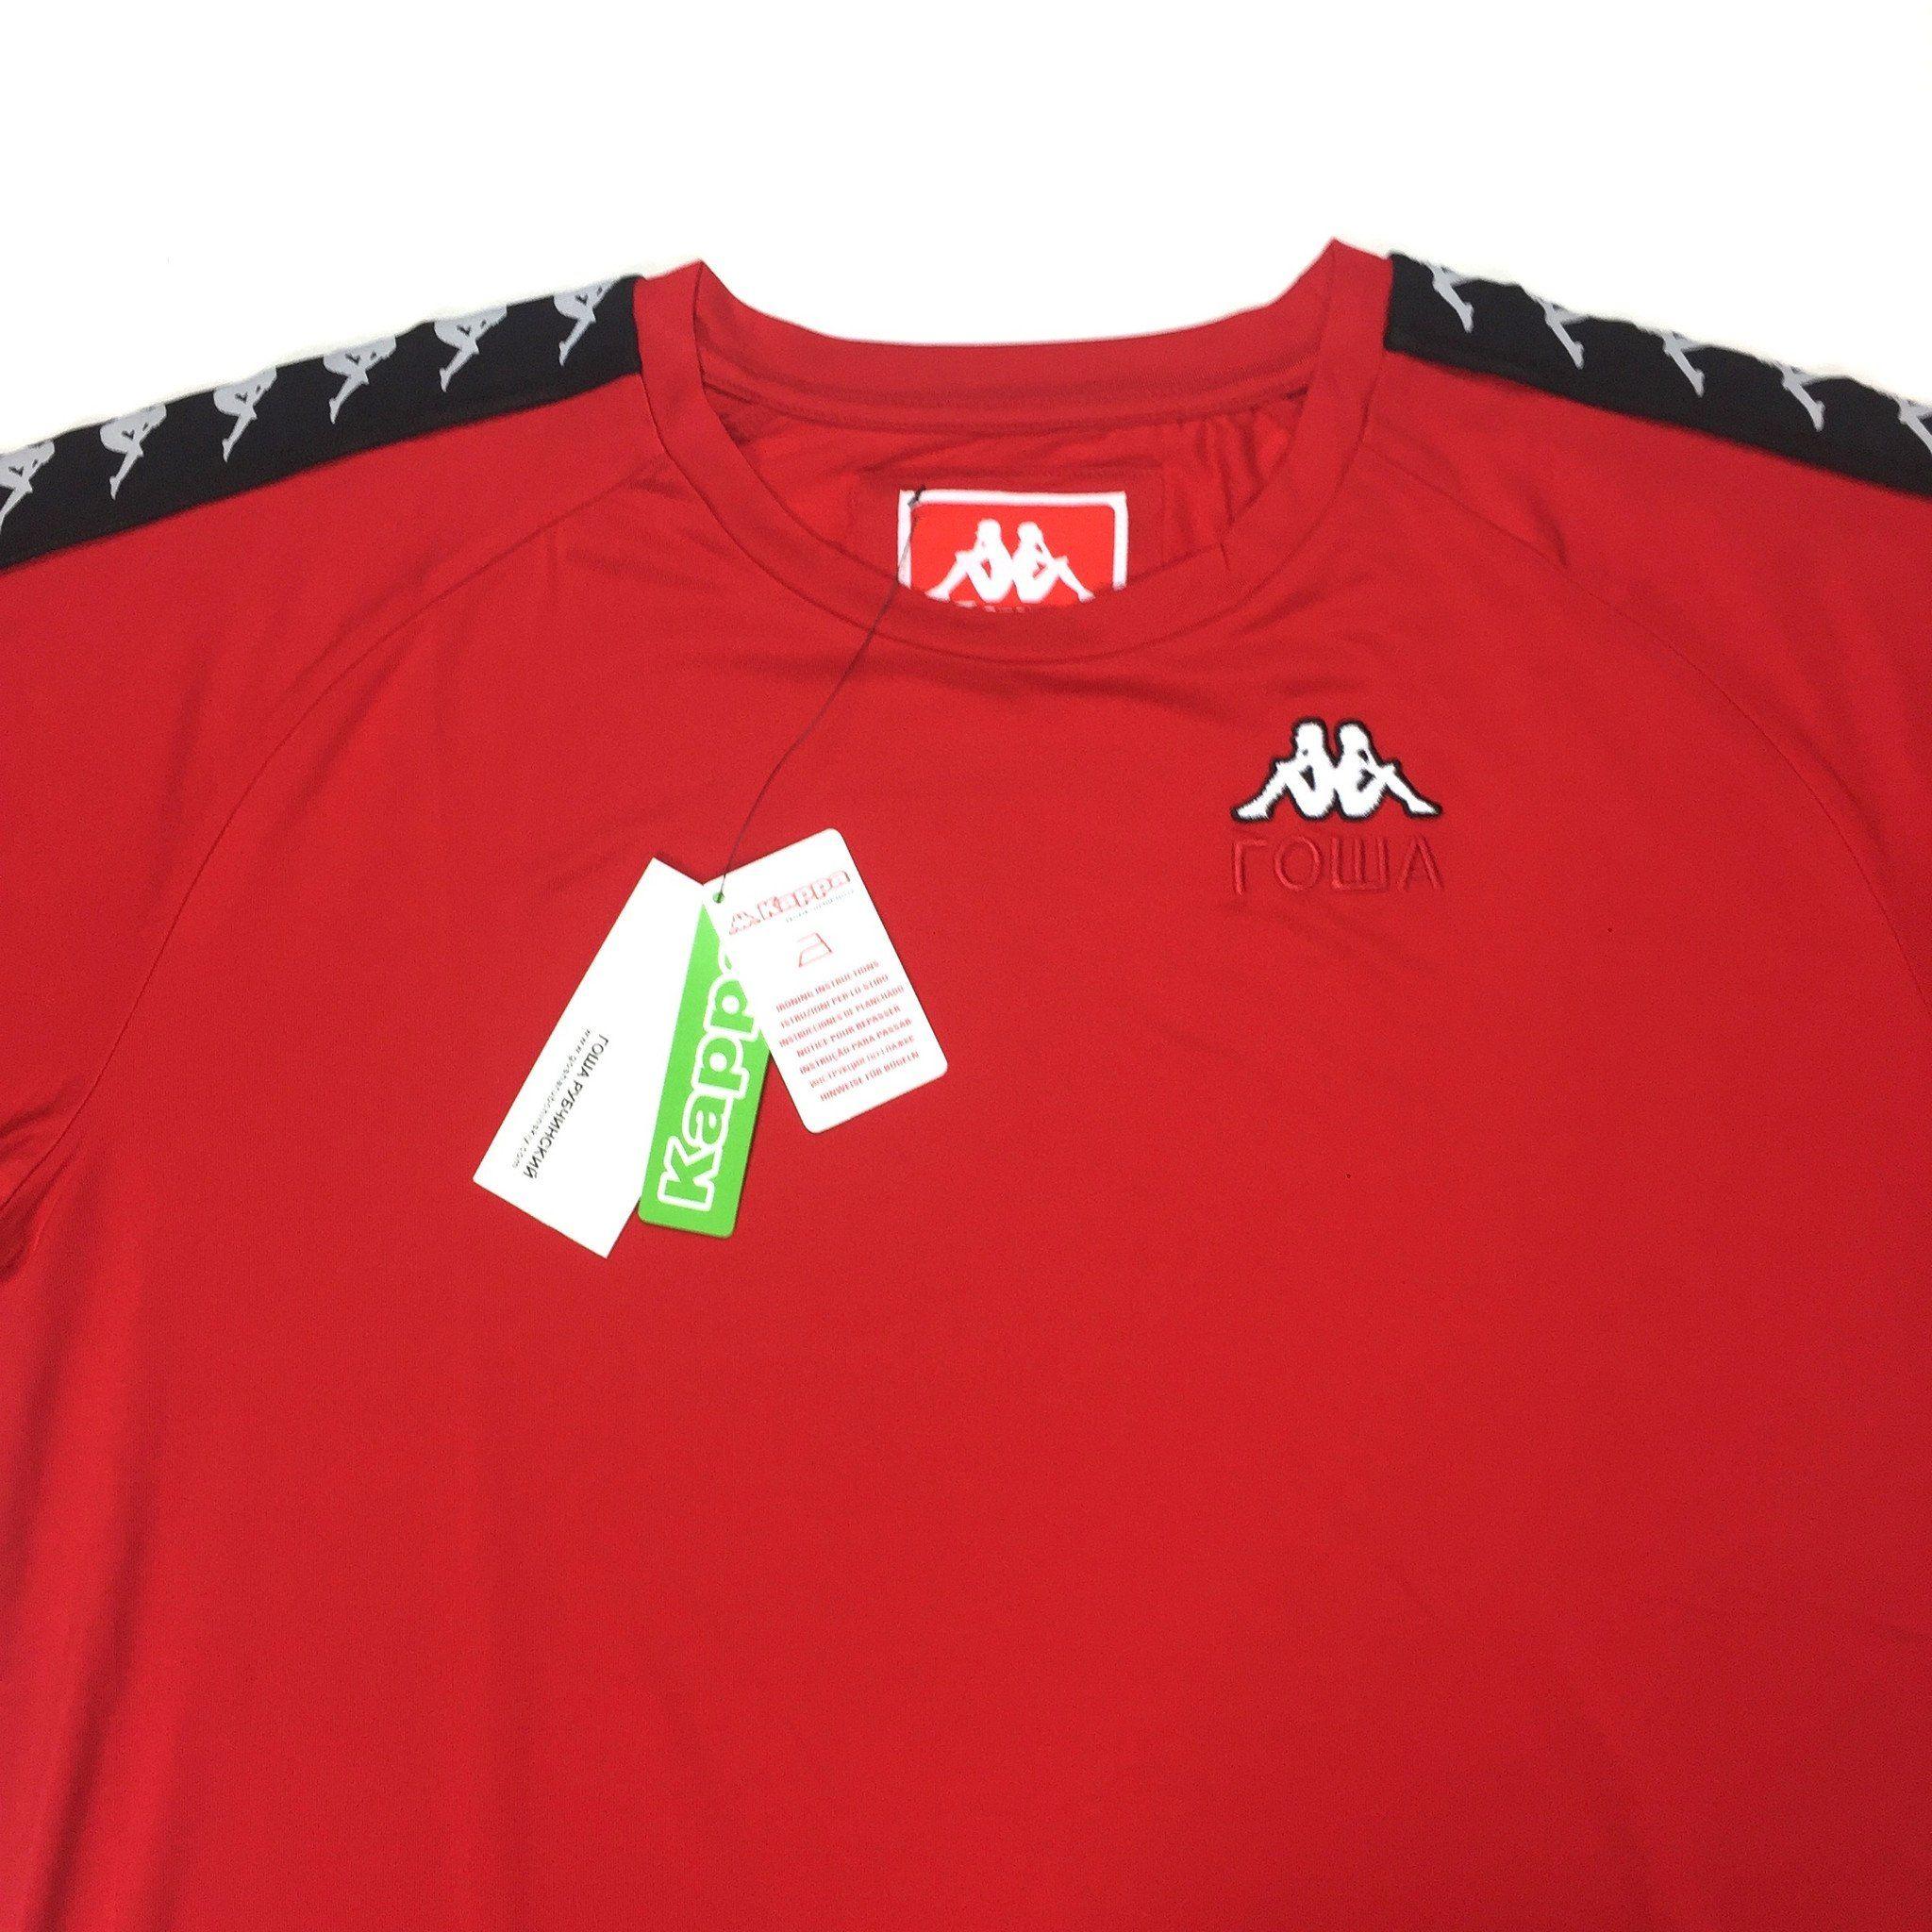 Gosha Rubchinskiy Logo - Gosha Rubchinskiy x Kappa - Red Logo Embroidered Crewneck T-Shirt ...